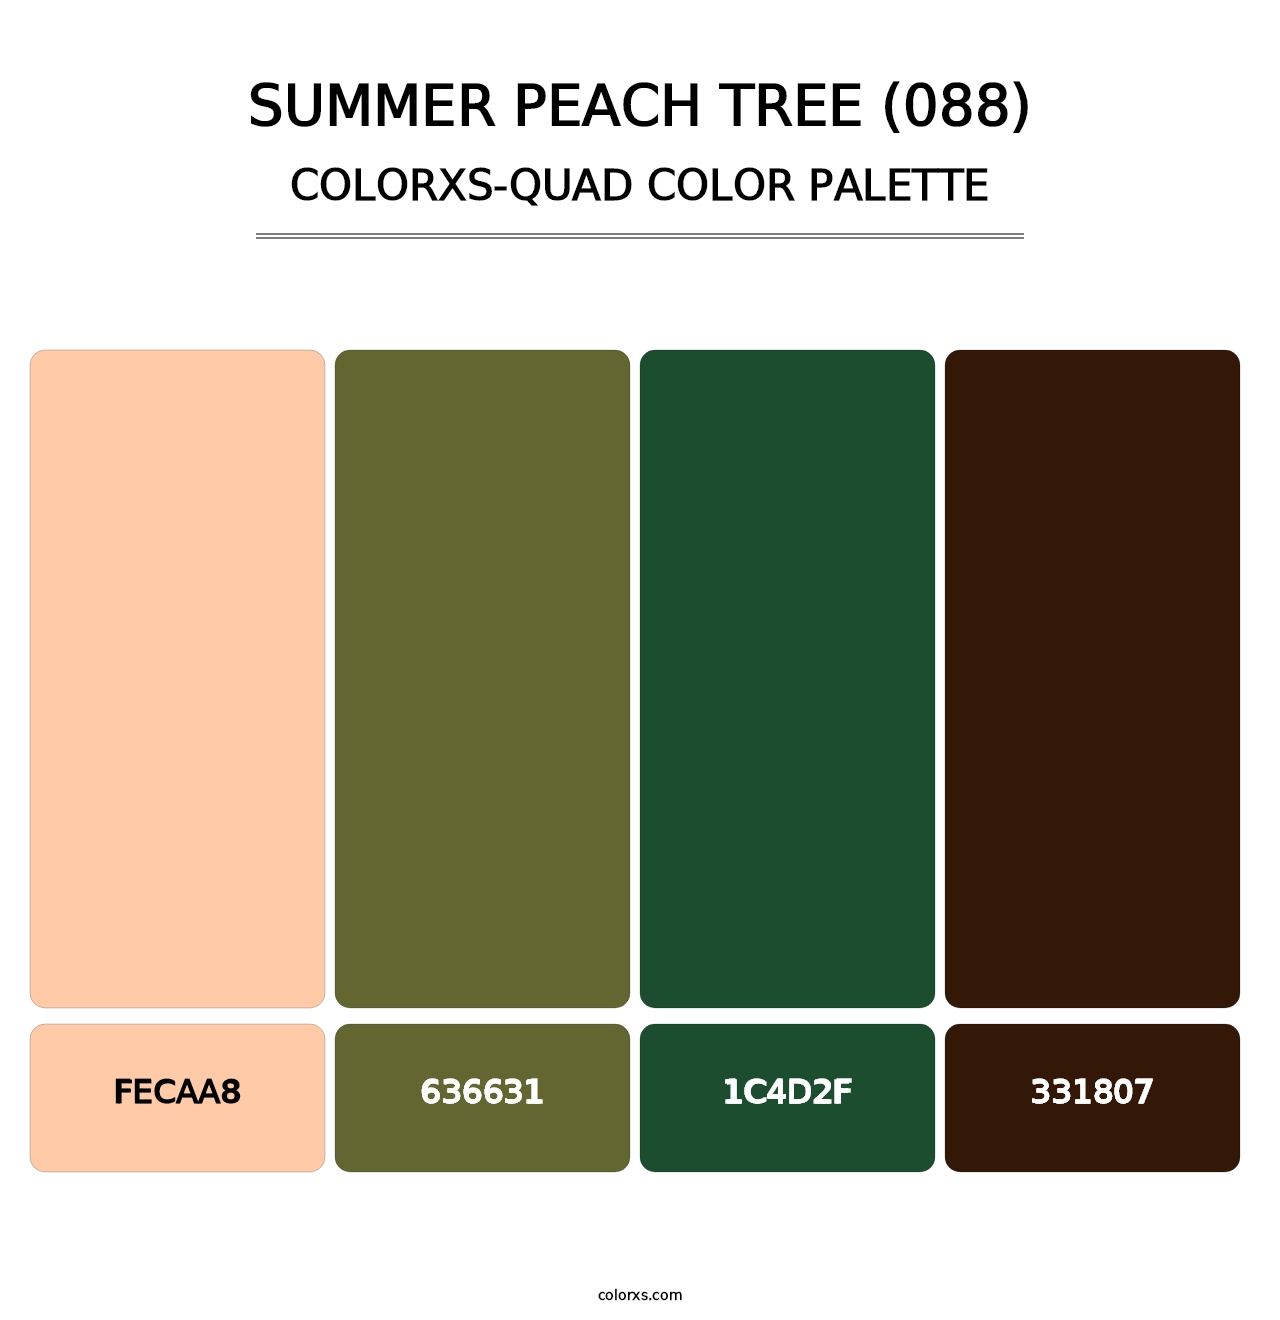 Summer Peach Tree (088) - Colorxs Quad Palette